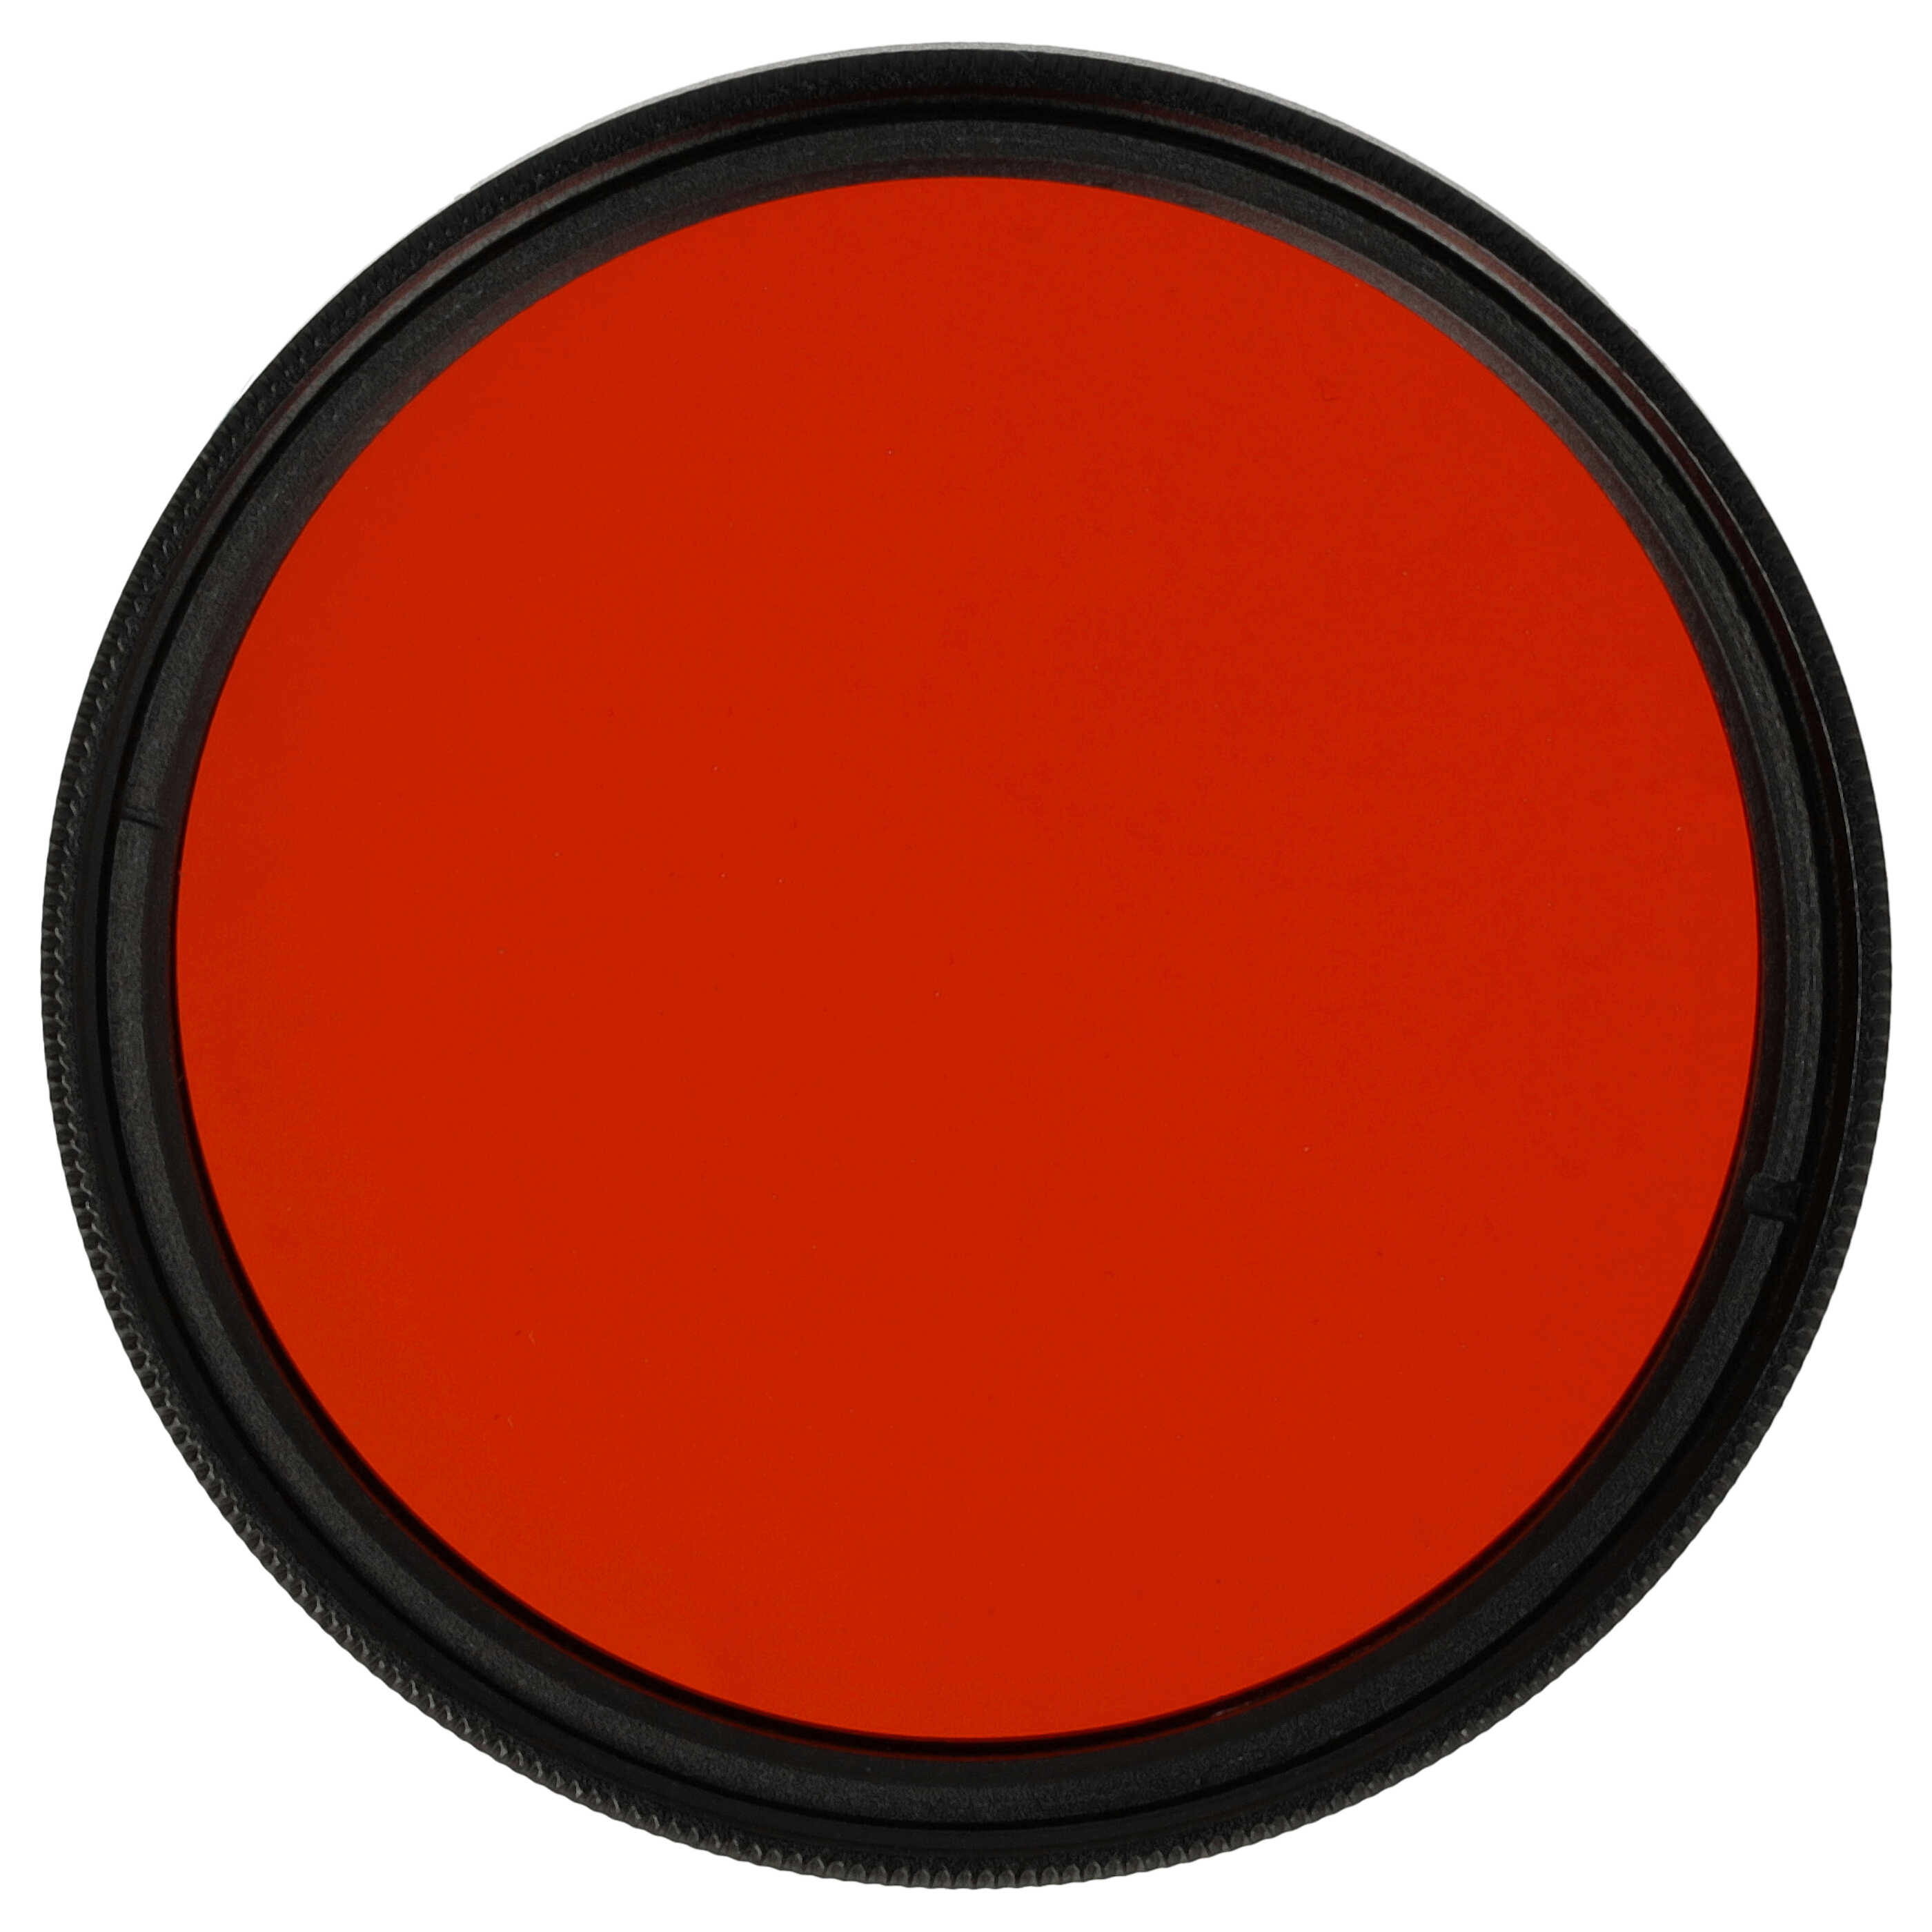 Coloured Filter, Orange suitable for Camera Lenses with 49 mm Filter Thread - Orange Filter